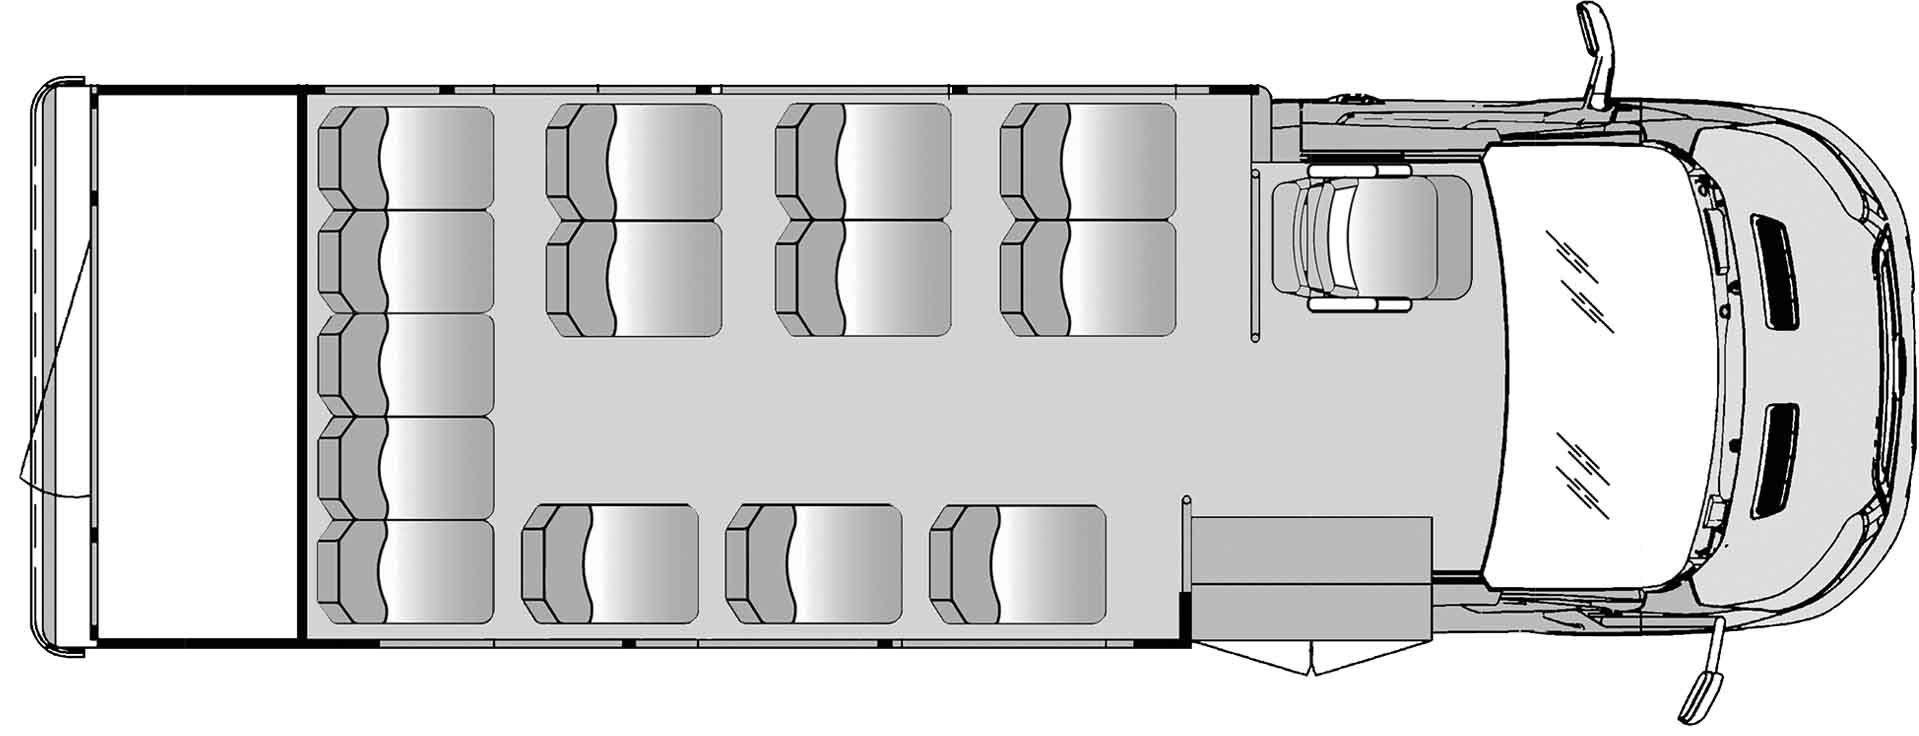 14 Passenger With Rear Luggage Plus Driver Floorplan Image